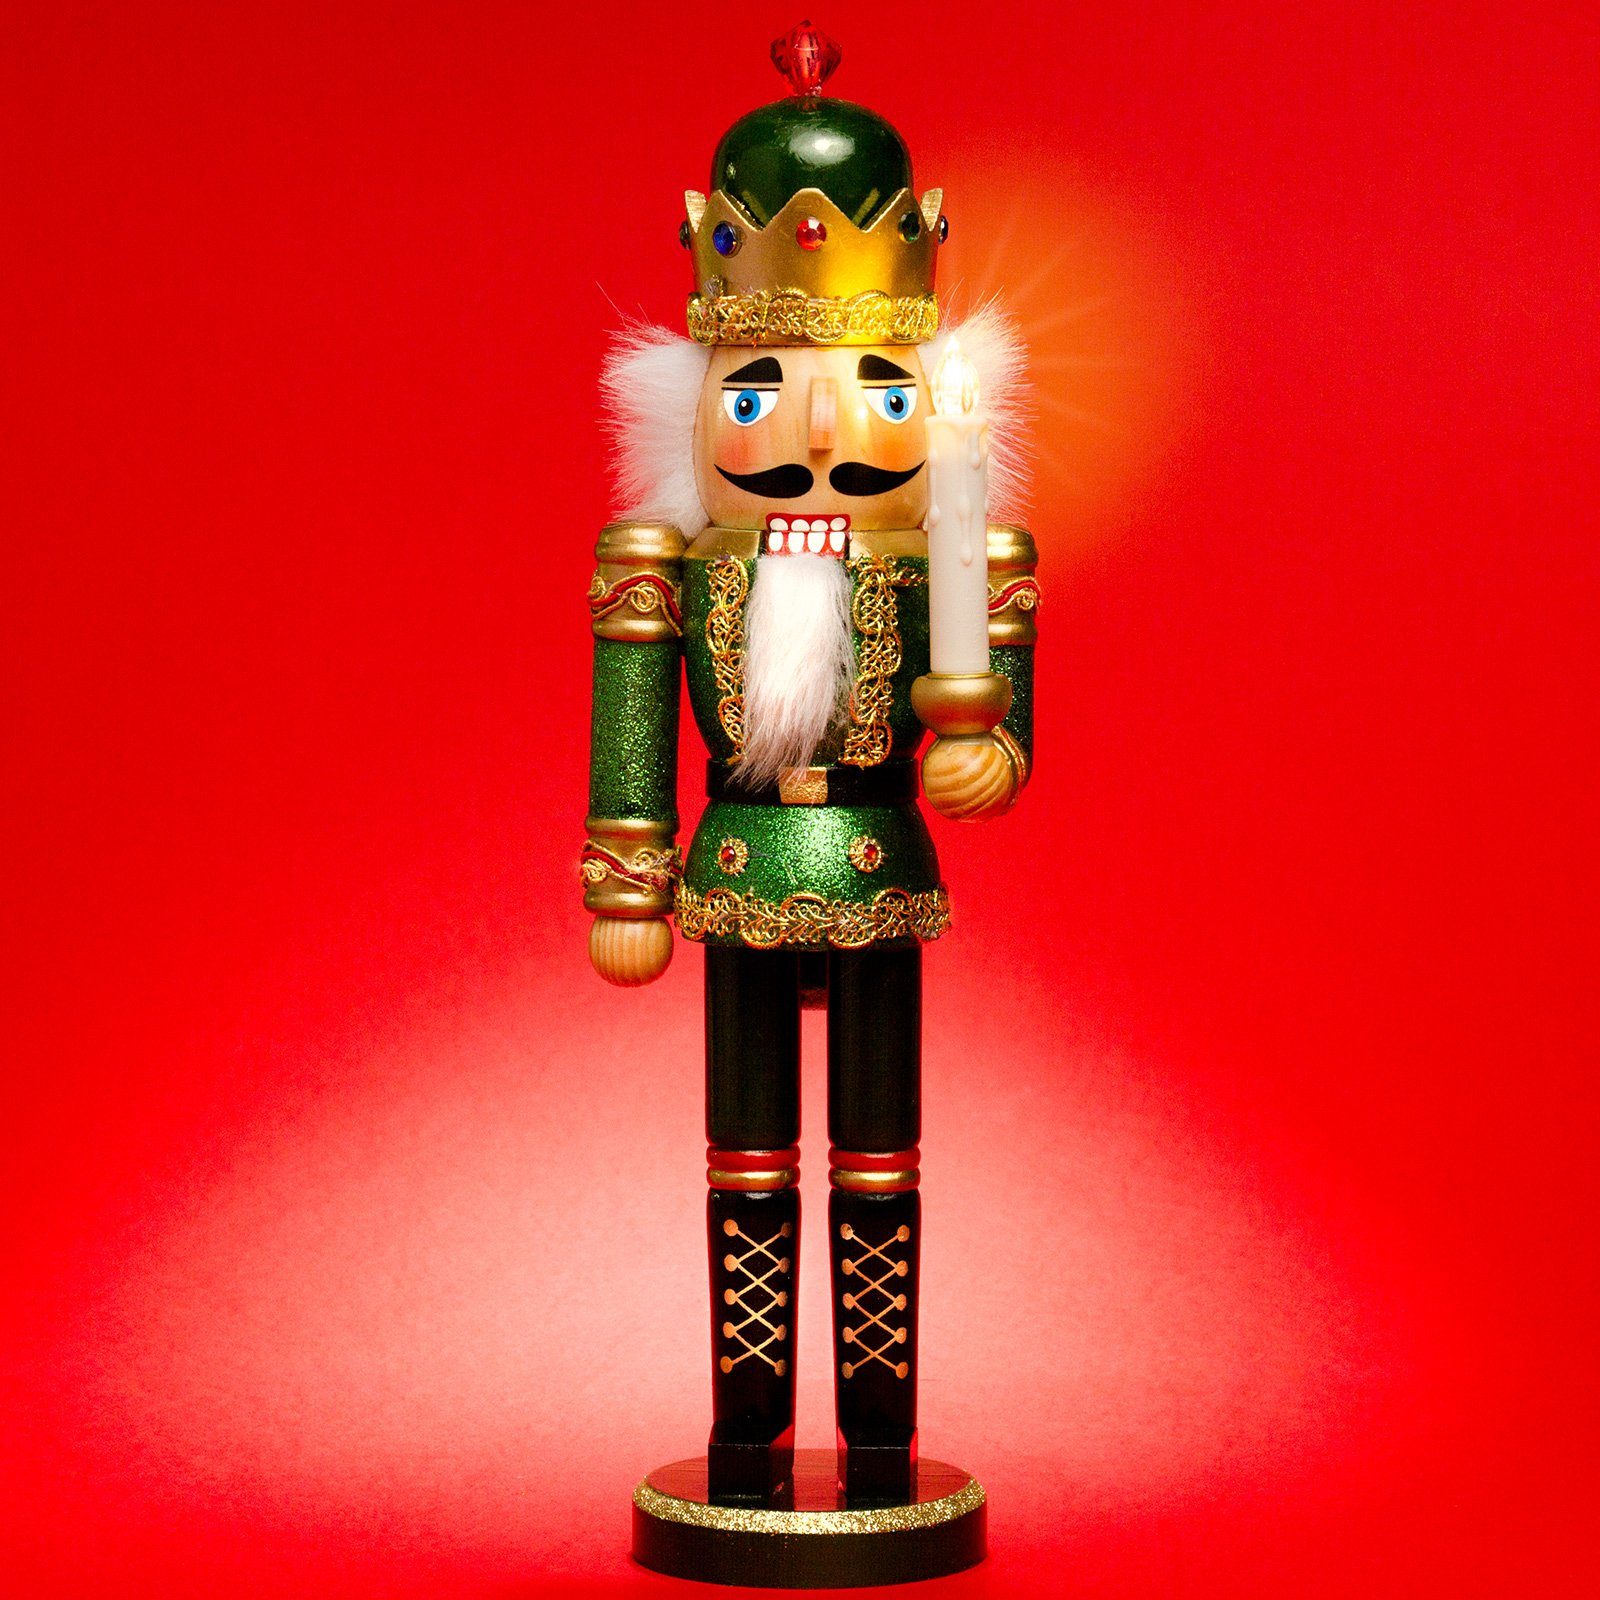 C03 KÖNIG XL Glitzer LED Holz - grün mit Weihnachtsfigur Nussknacker NK-C SIKORA Kerze Deko aus